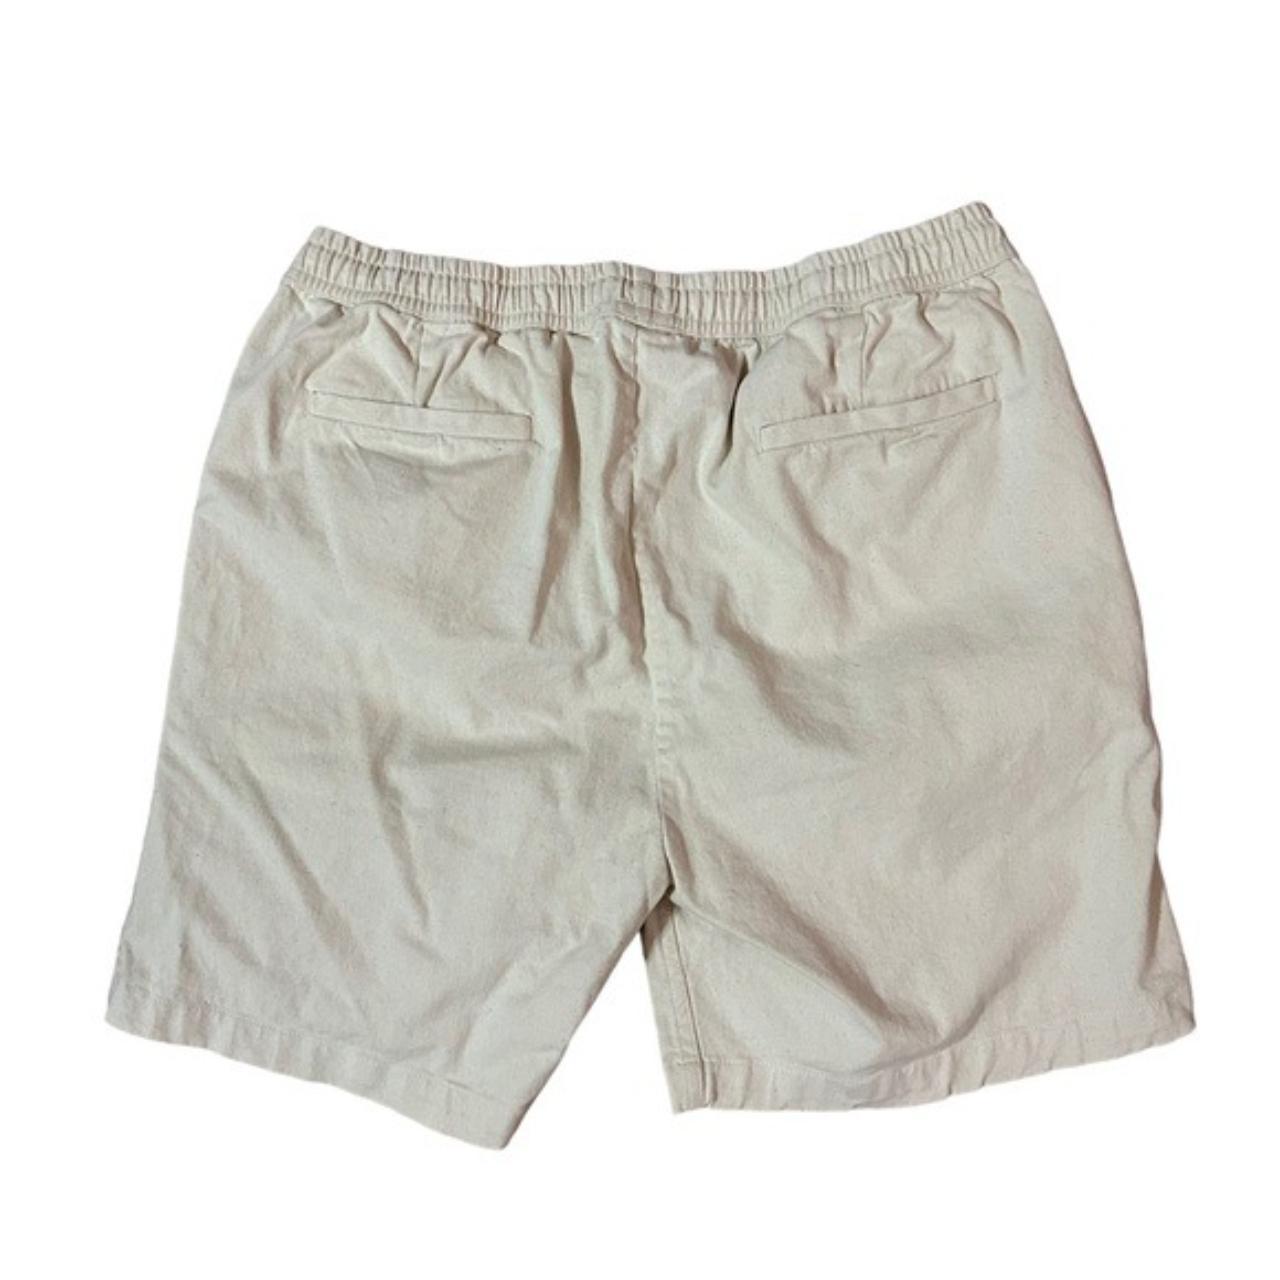 Corridor Men's Cream Shorts (3)